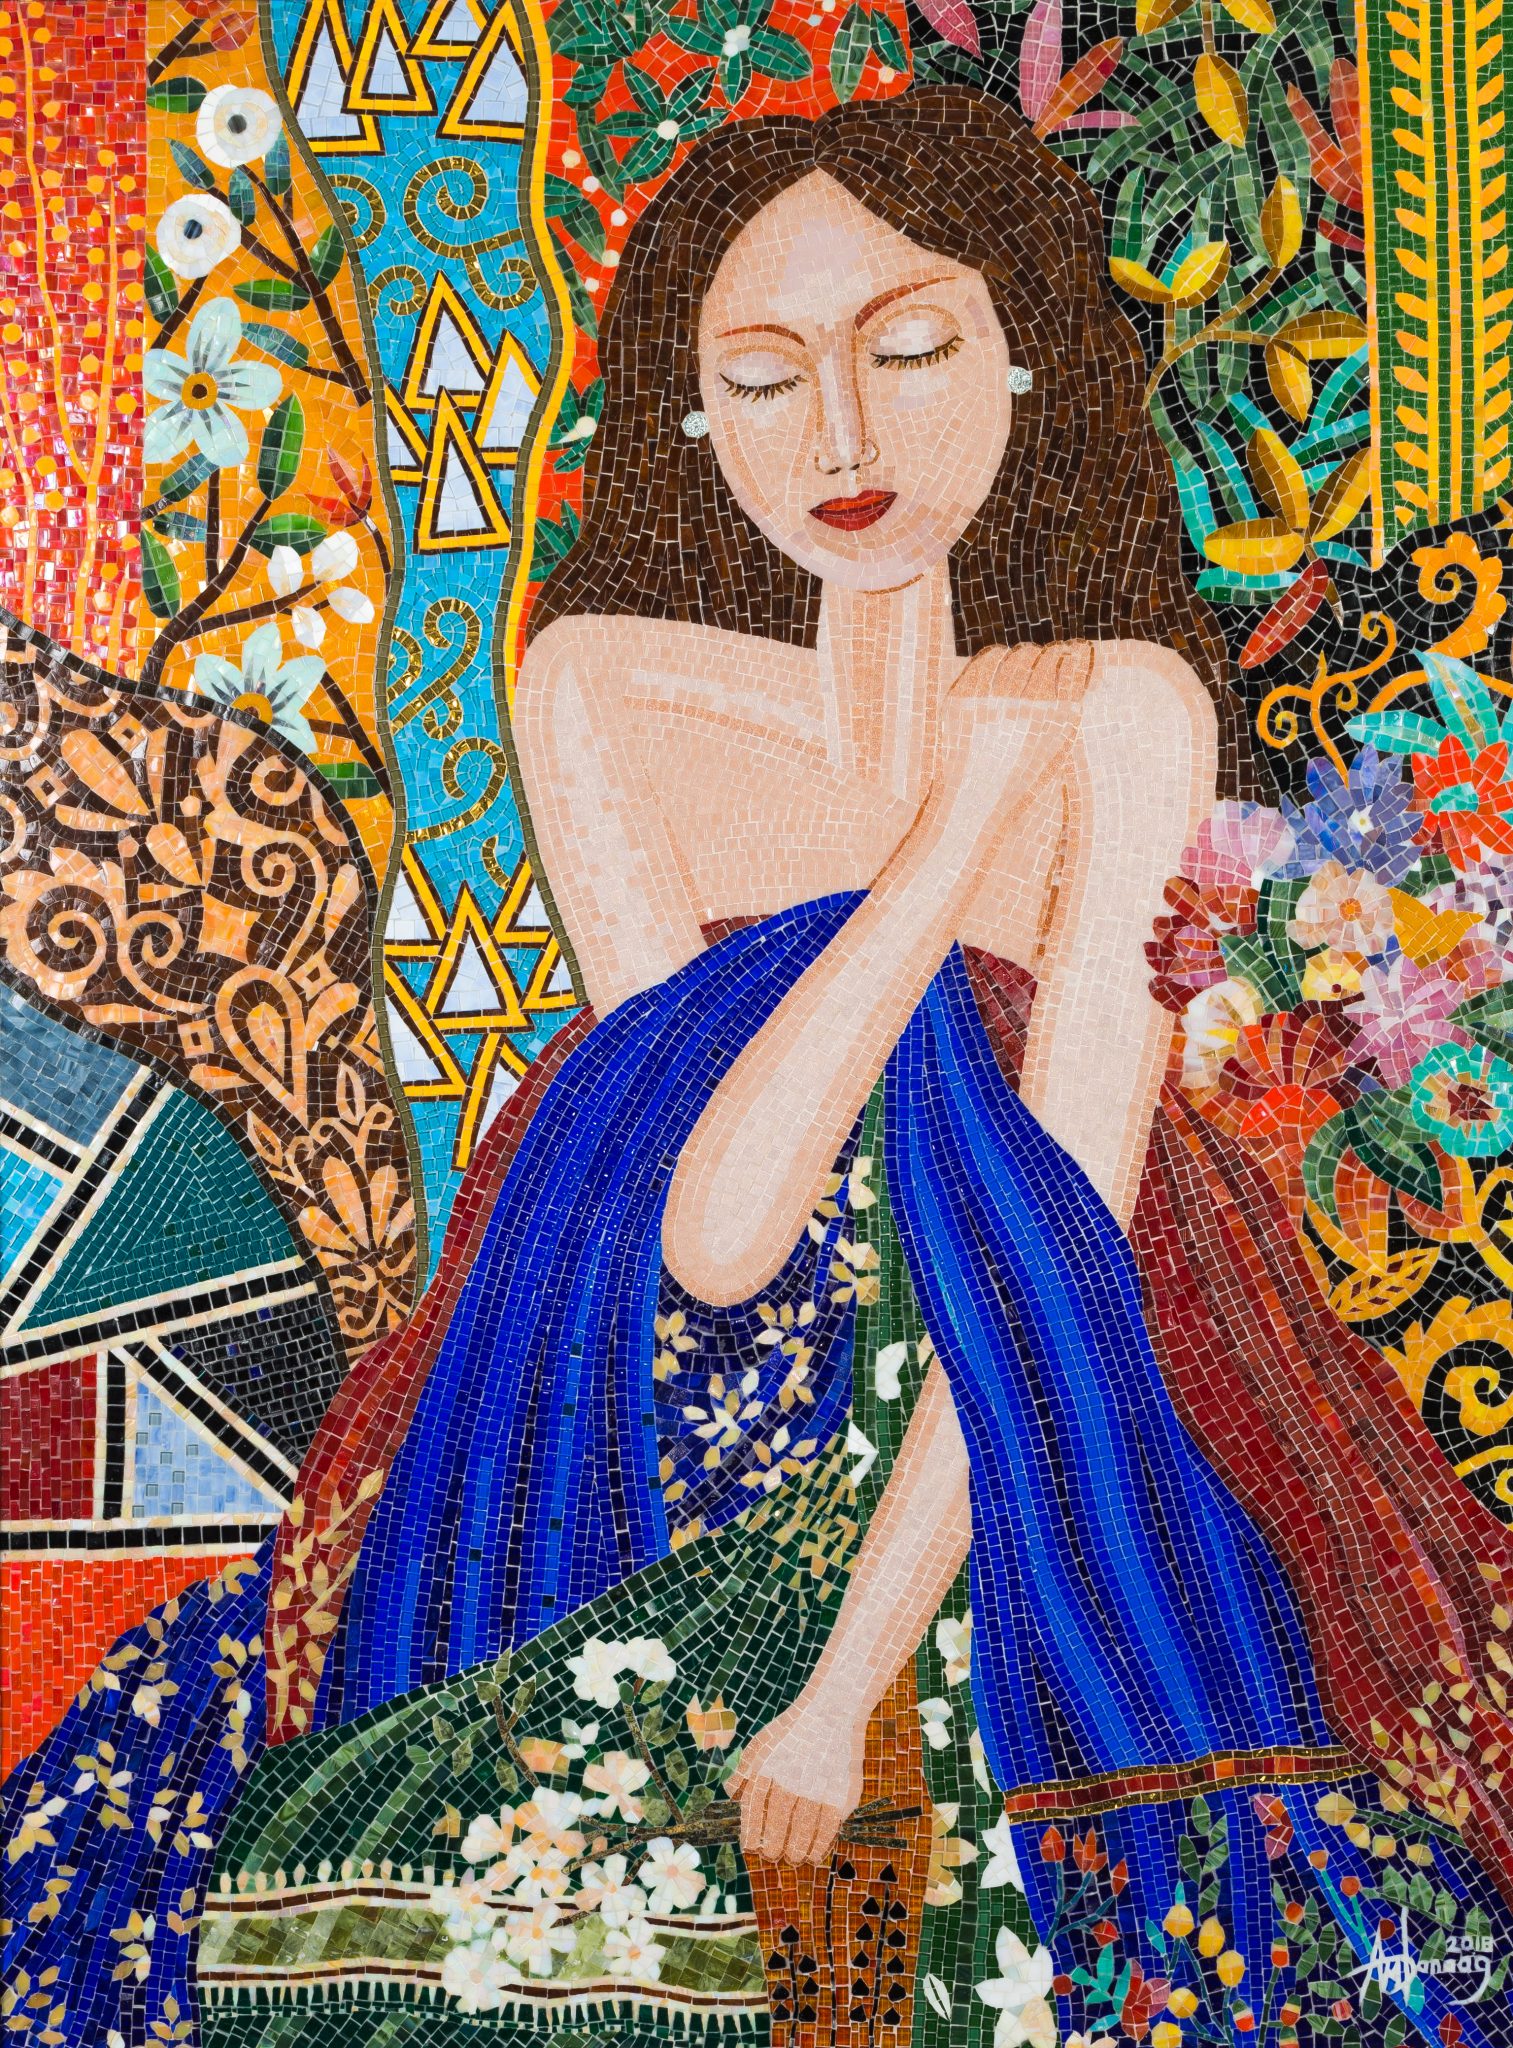 MOSAIC ART IN THE PHILIPPINE ART SCENE - Mozzaico | Leading Tile and